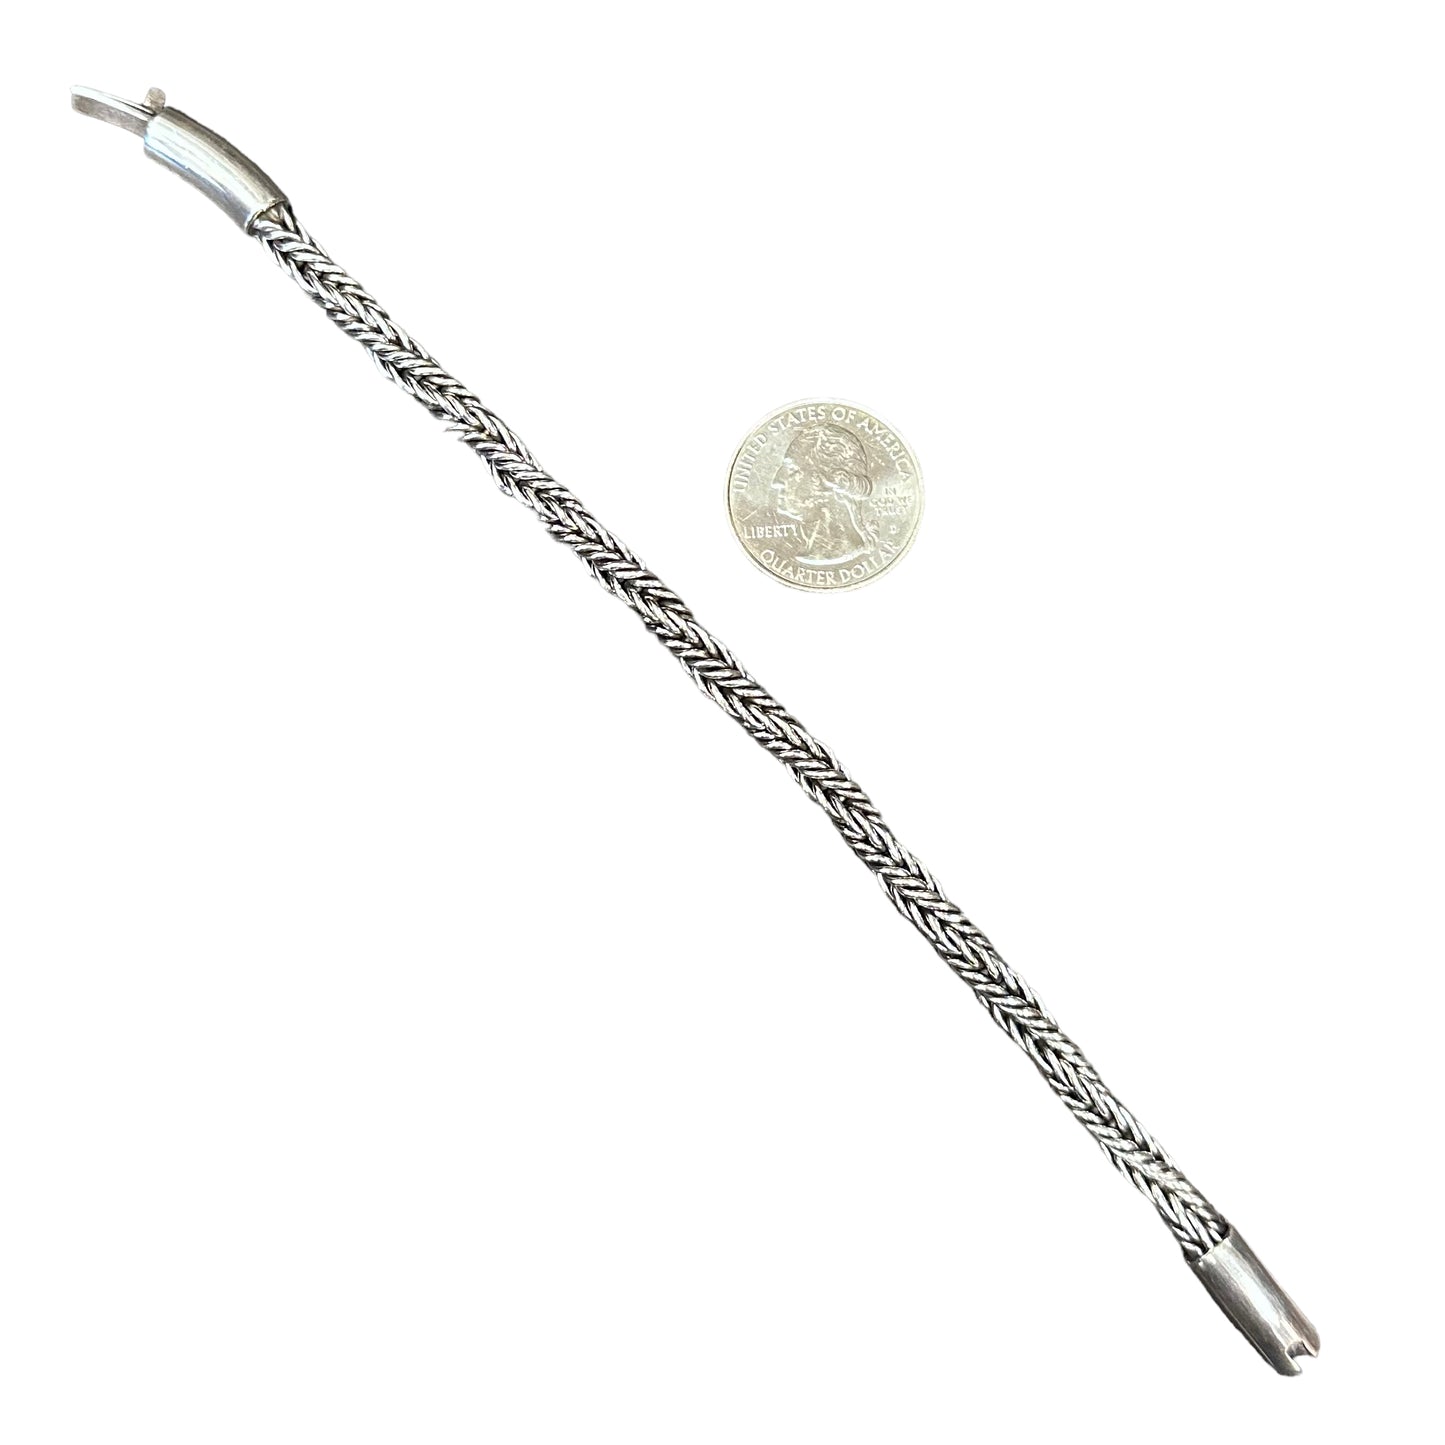 Handmade Braided 6mm Sterling Silver Bracelet Chain